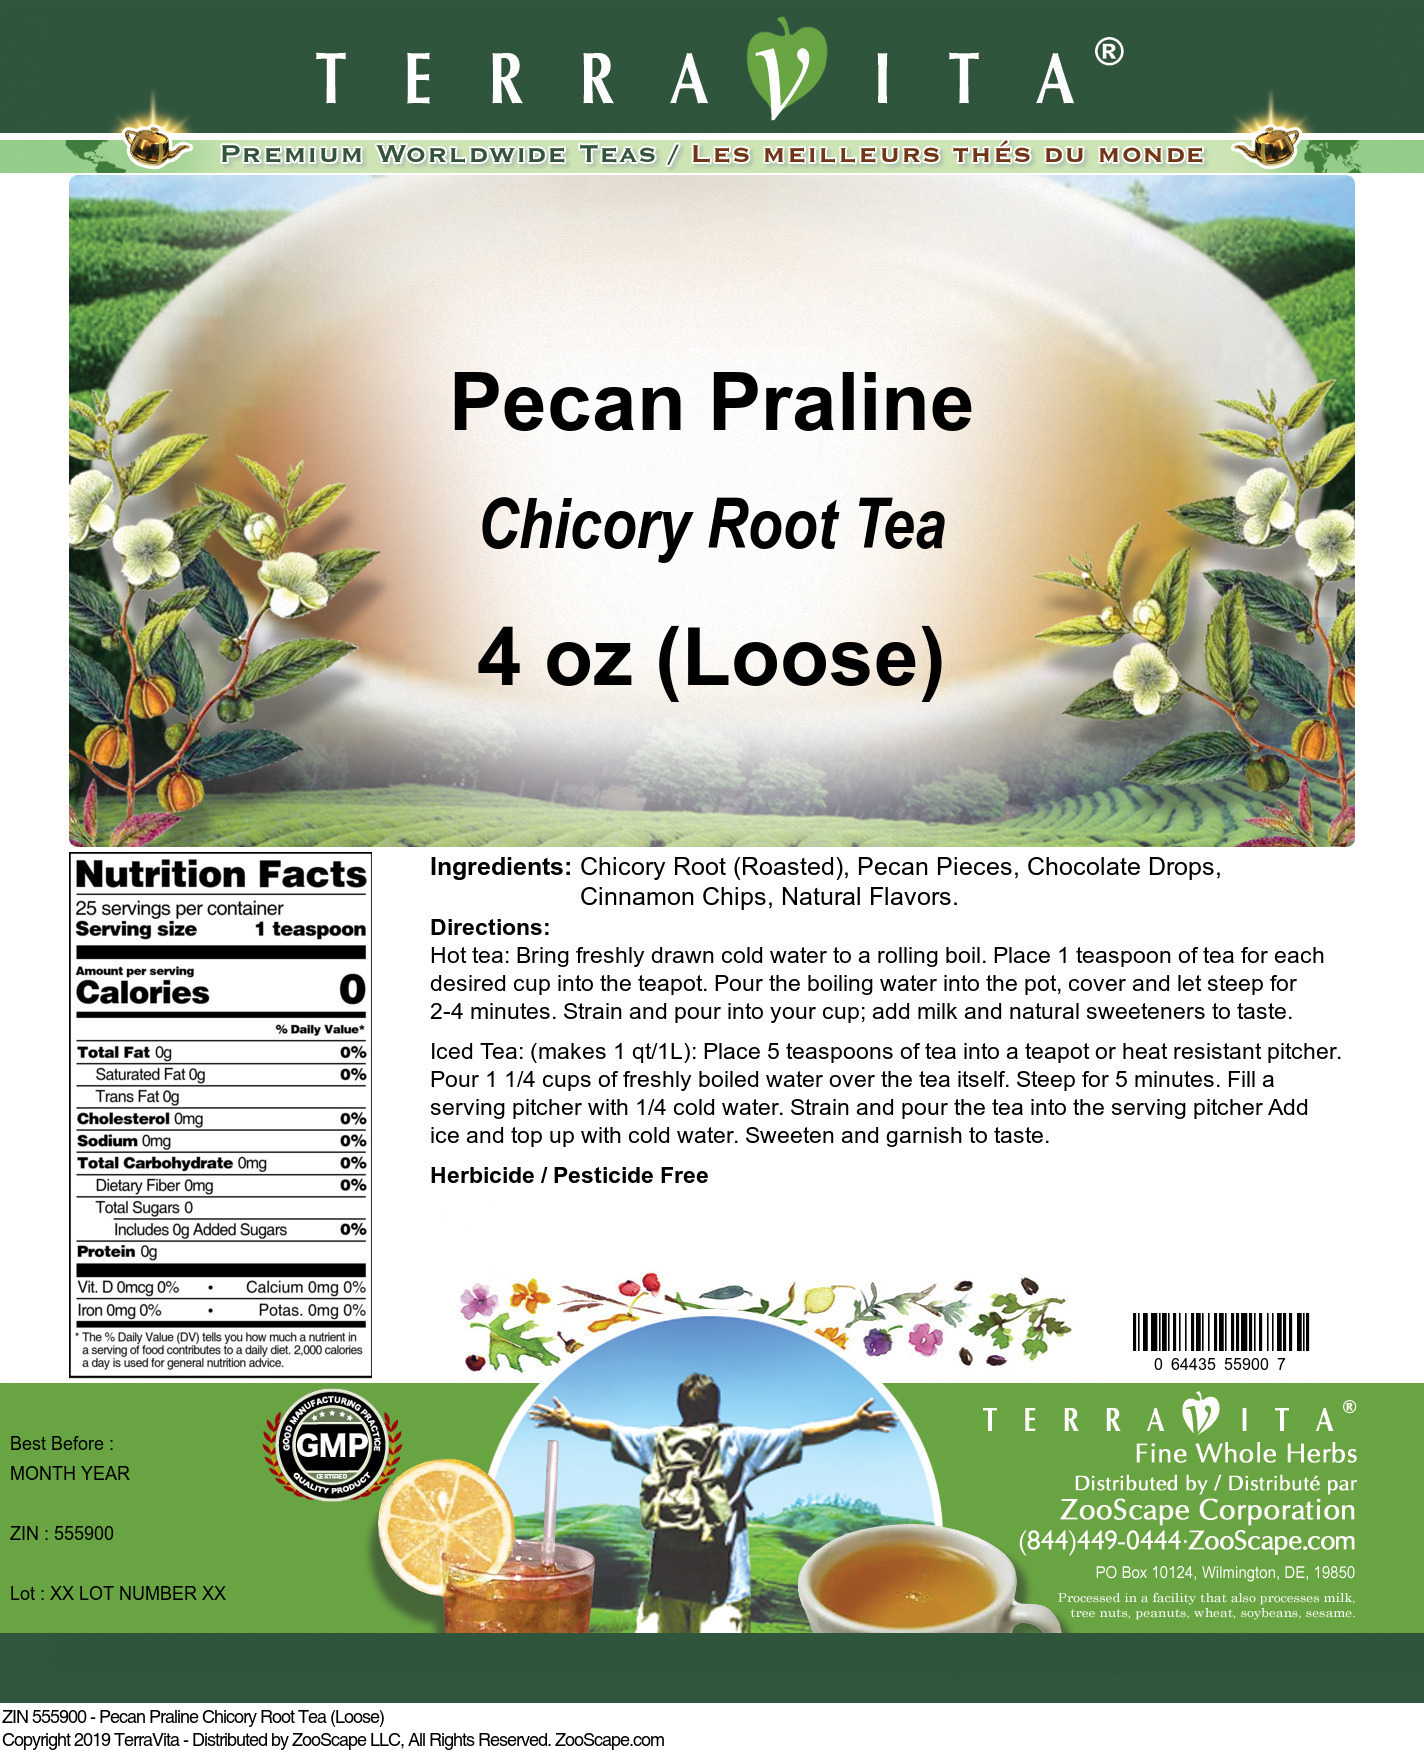 Pecan Praline Chicory Root Tea (Loose) - Label